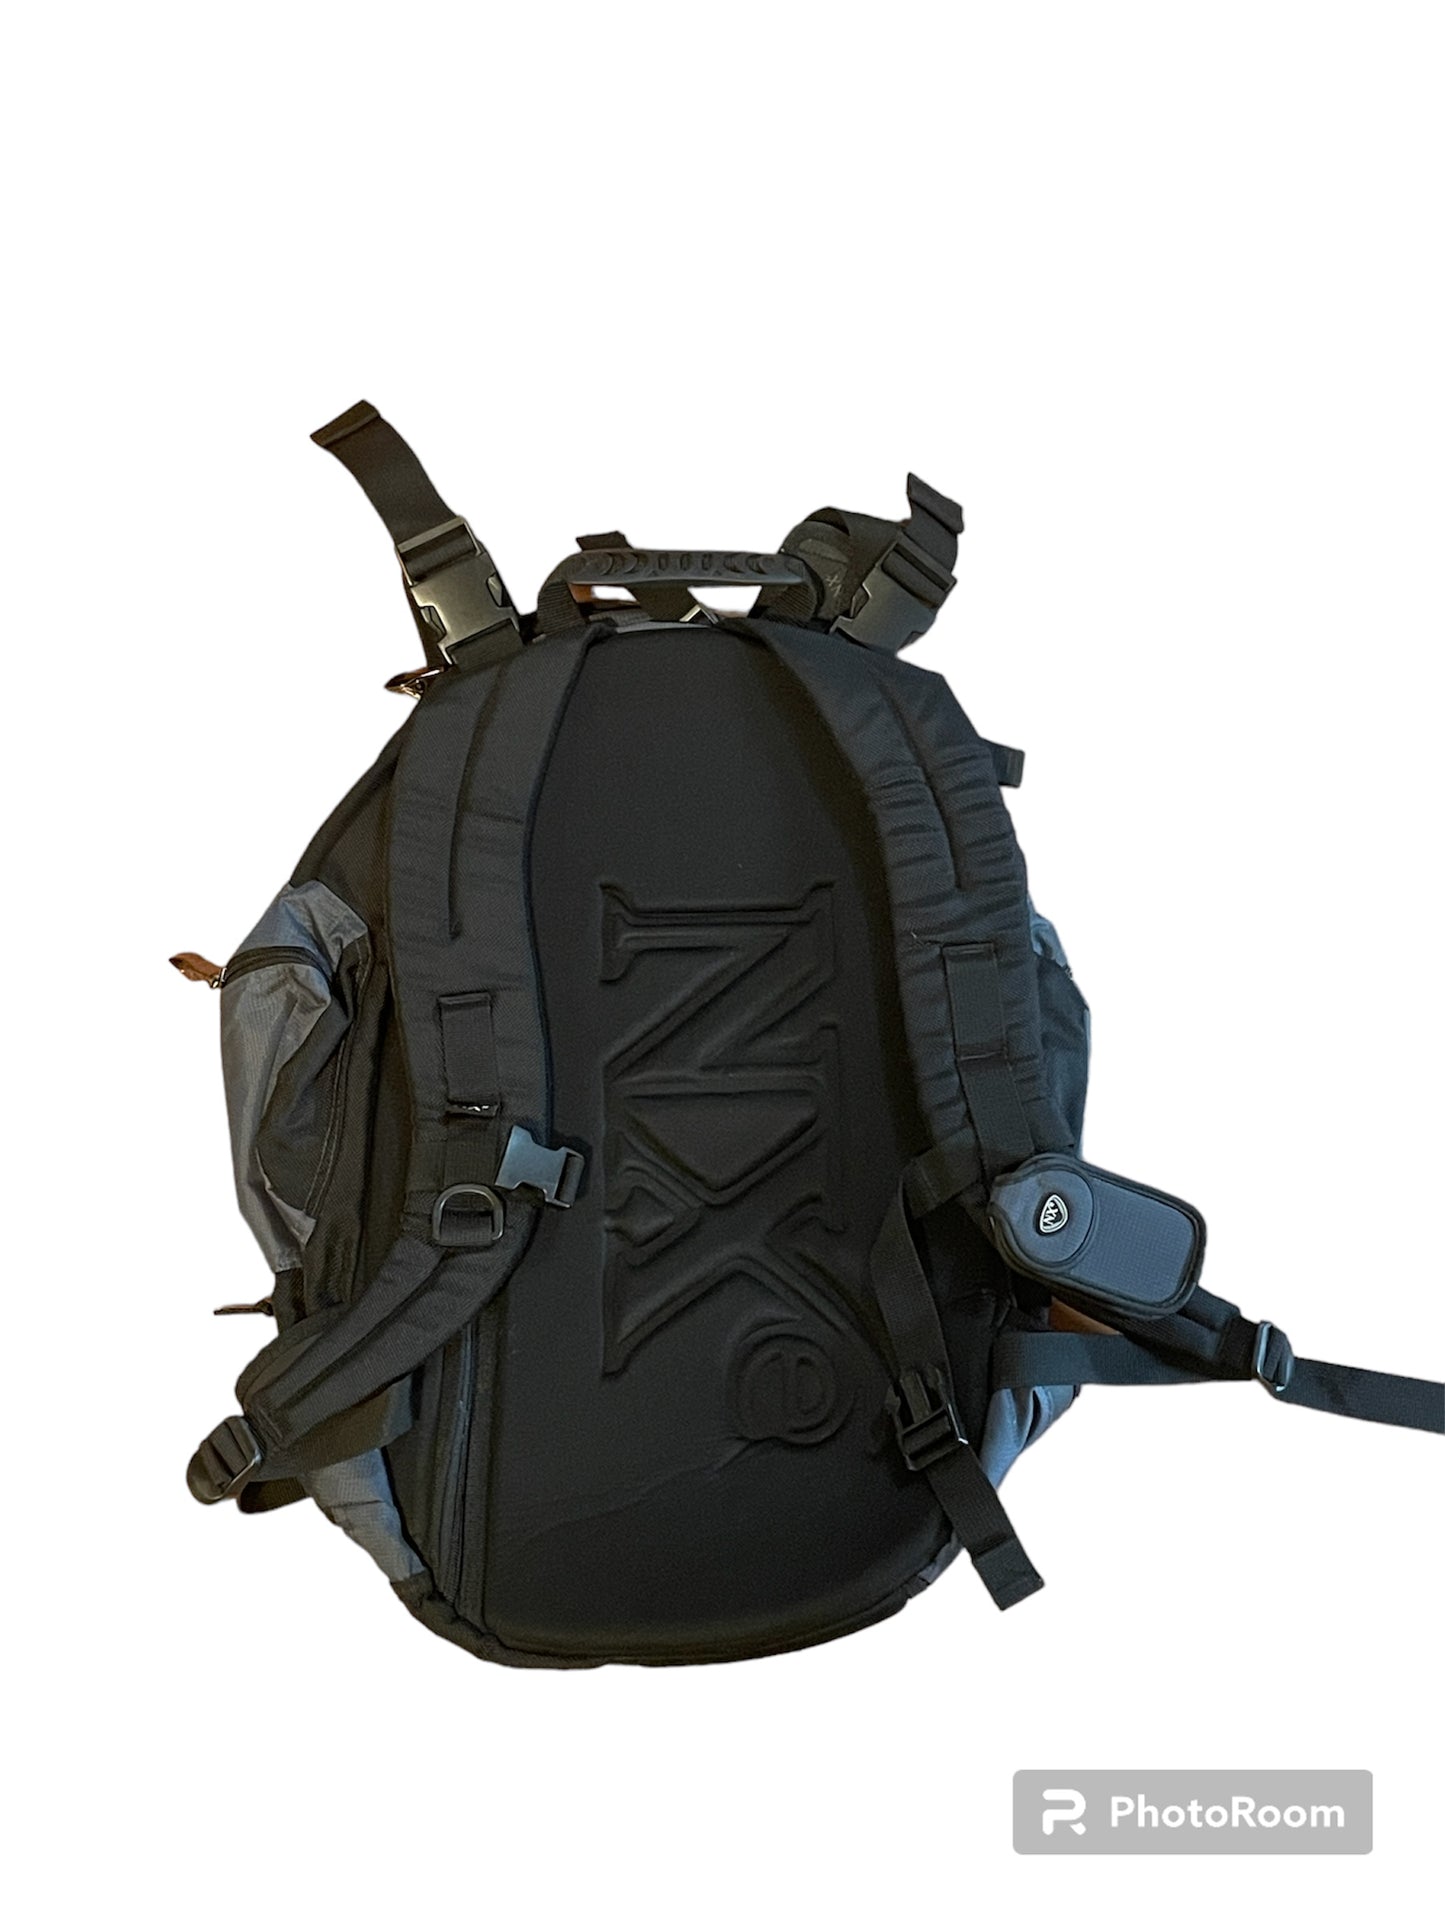 NXe Backpack and marker holder